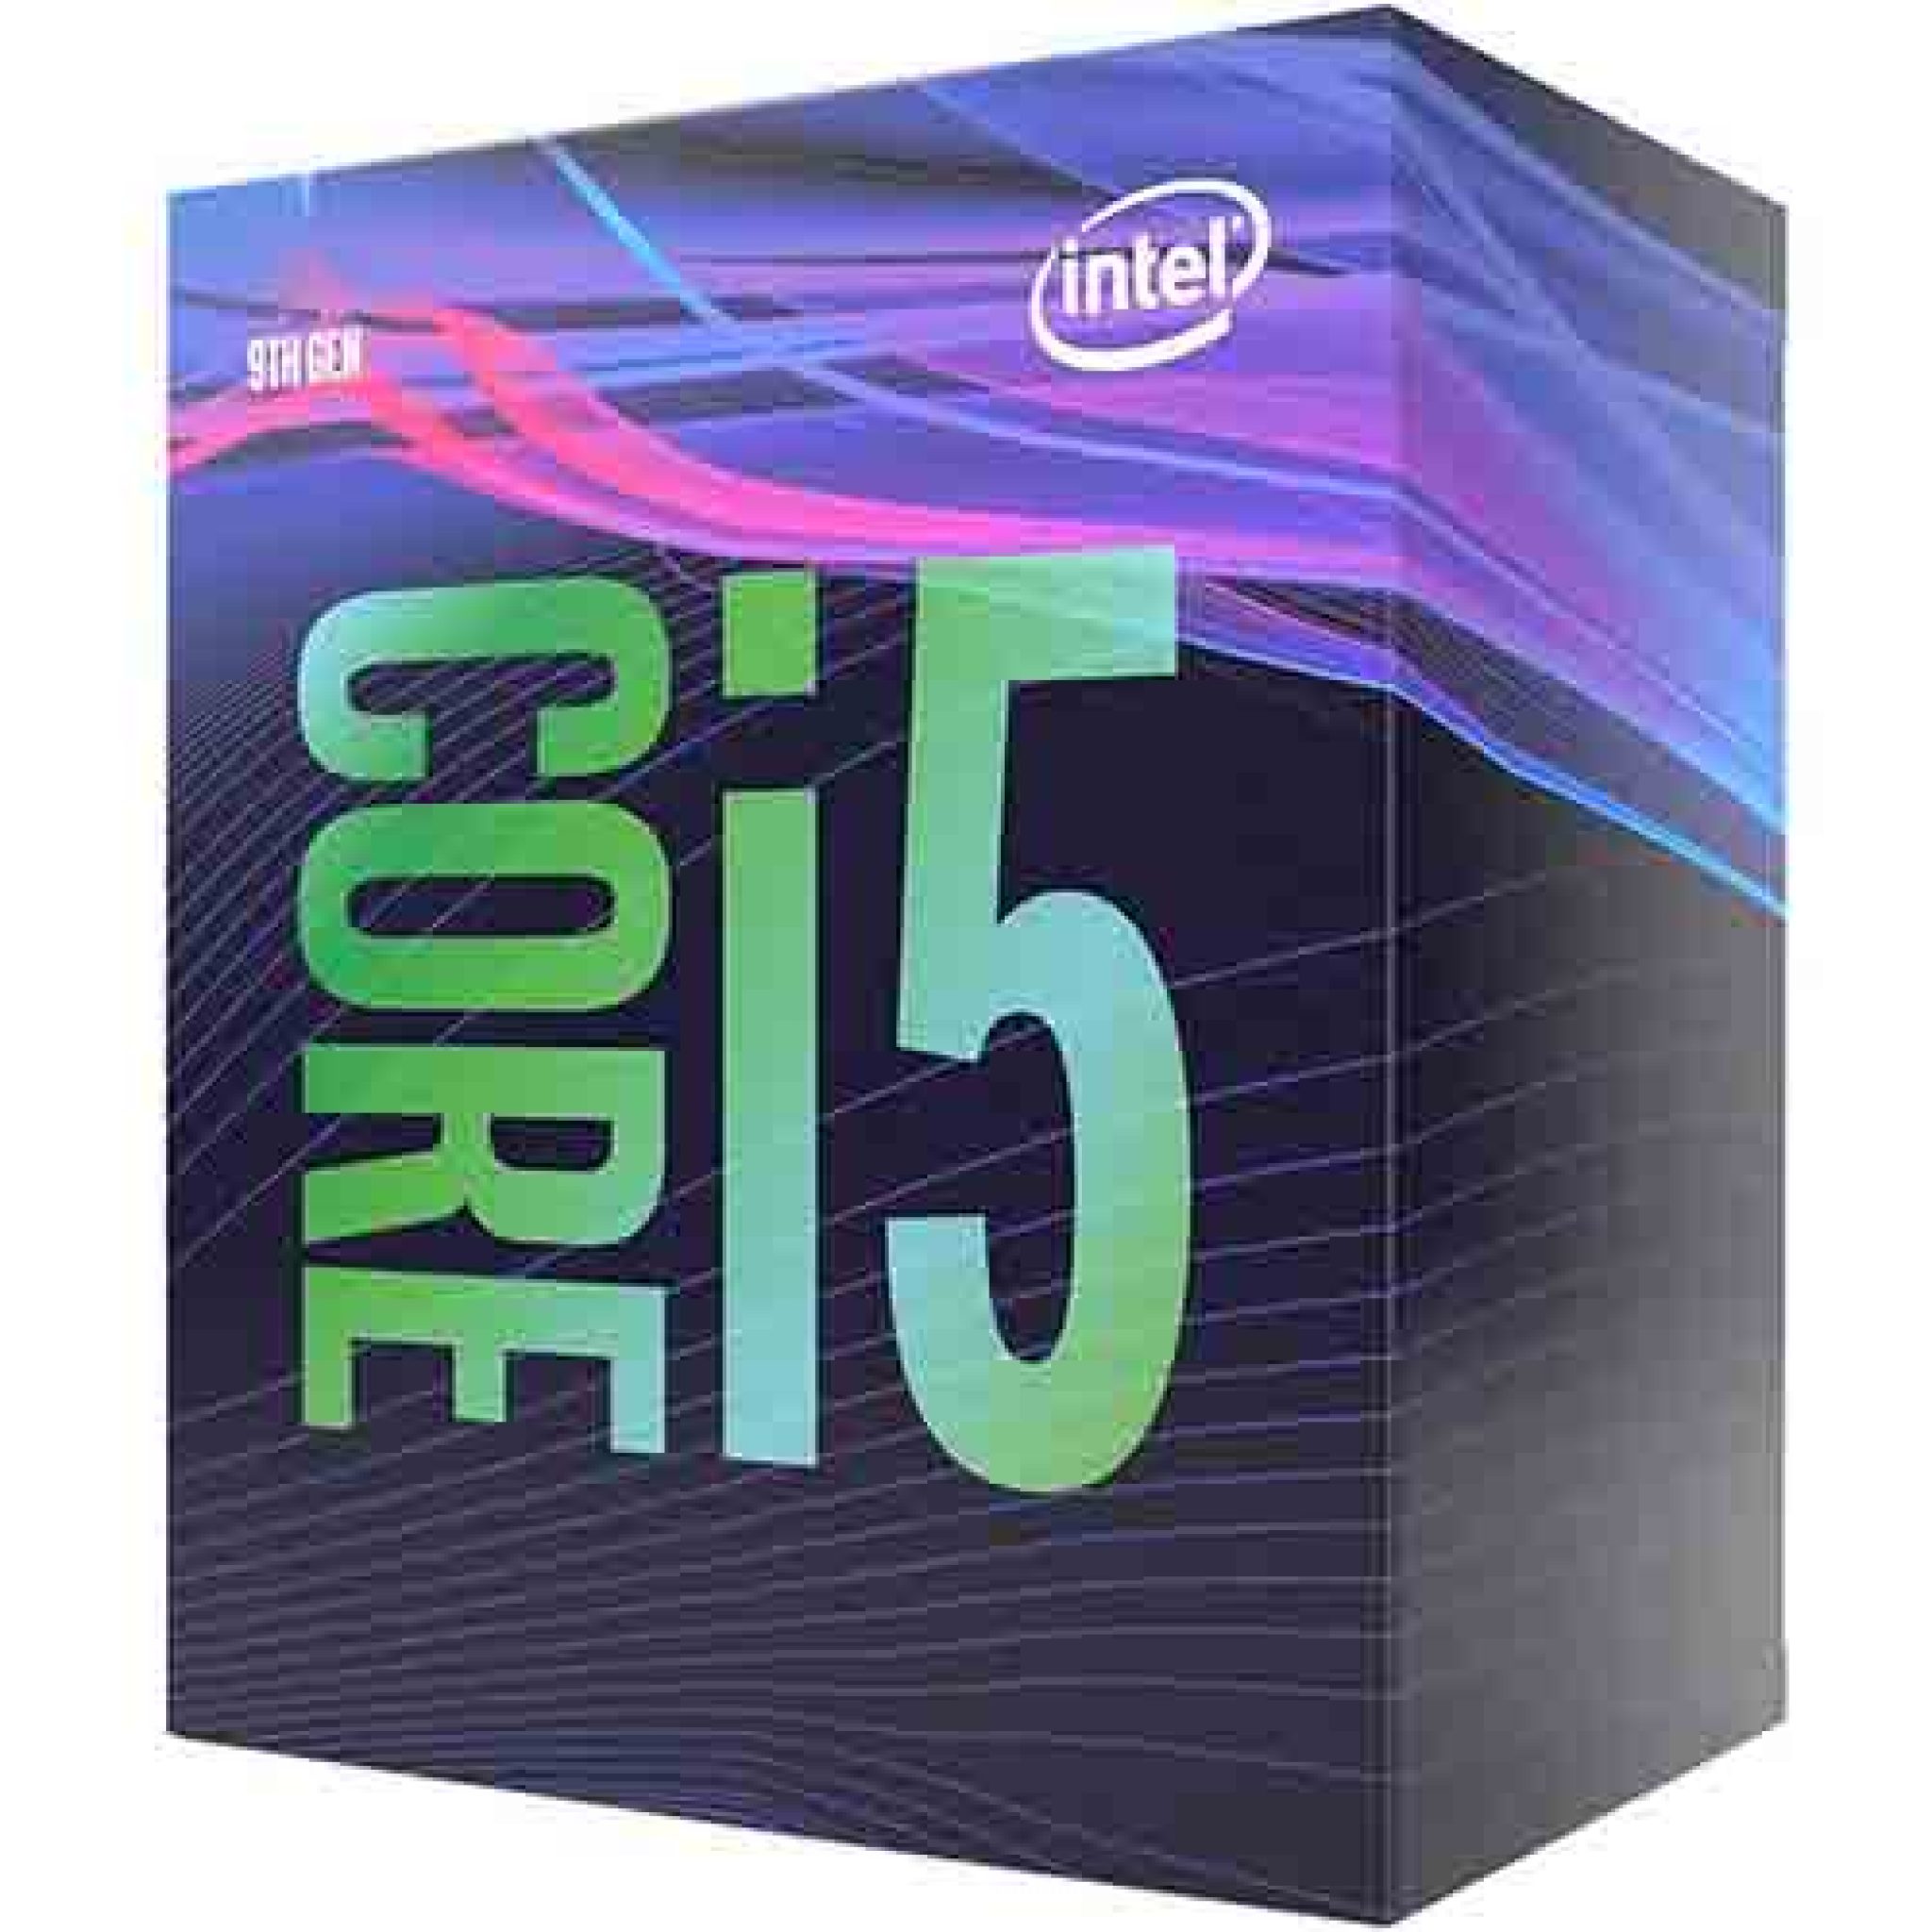 Intel Core i5 9400f まとめ買いお得 - www.woodpreneurlife.com